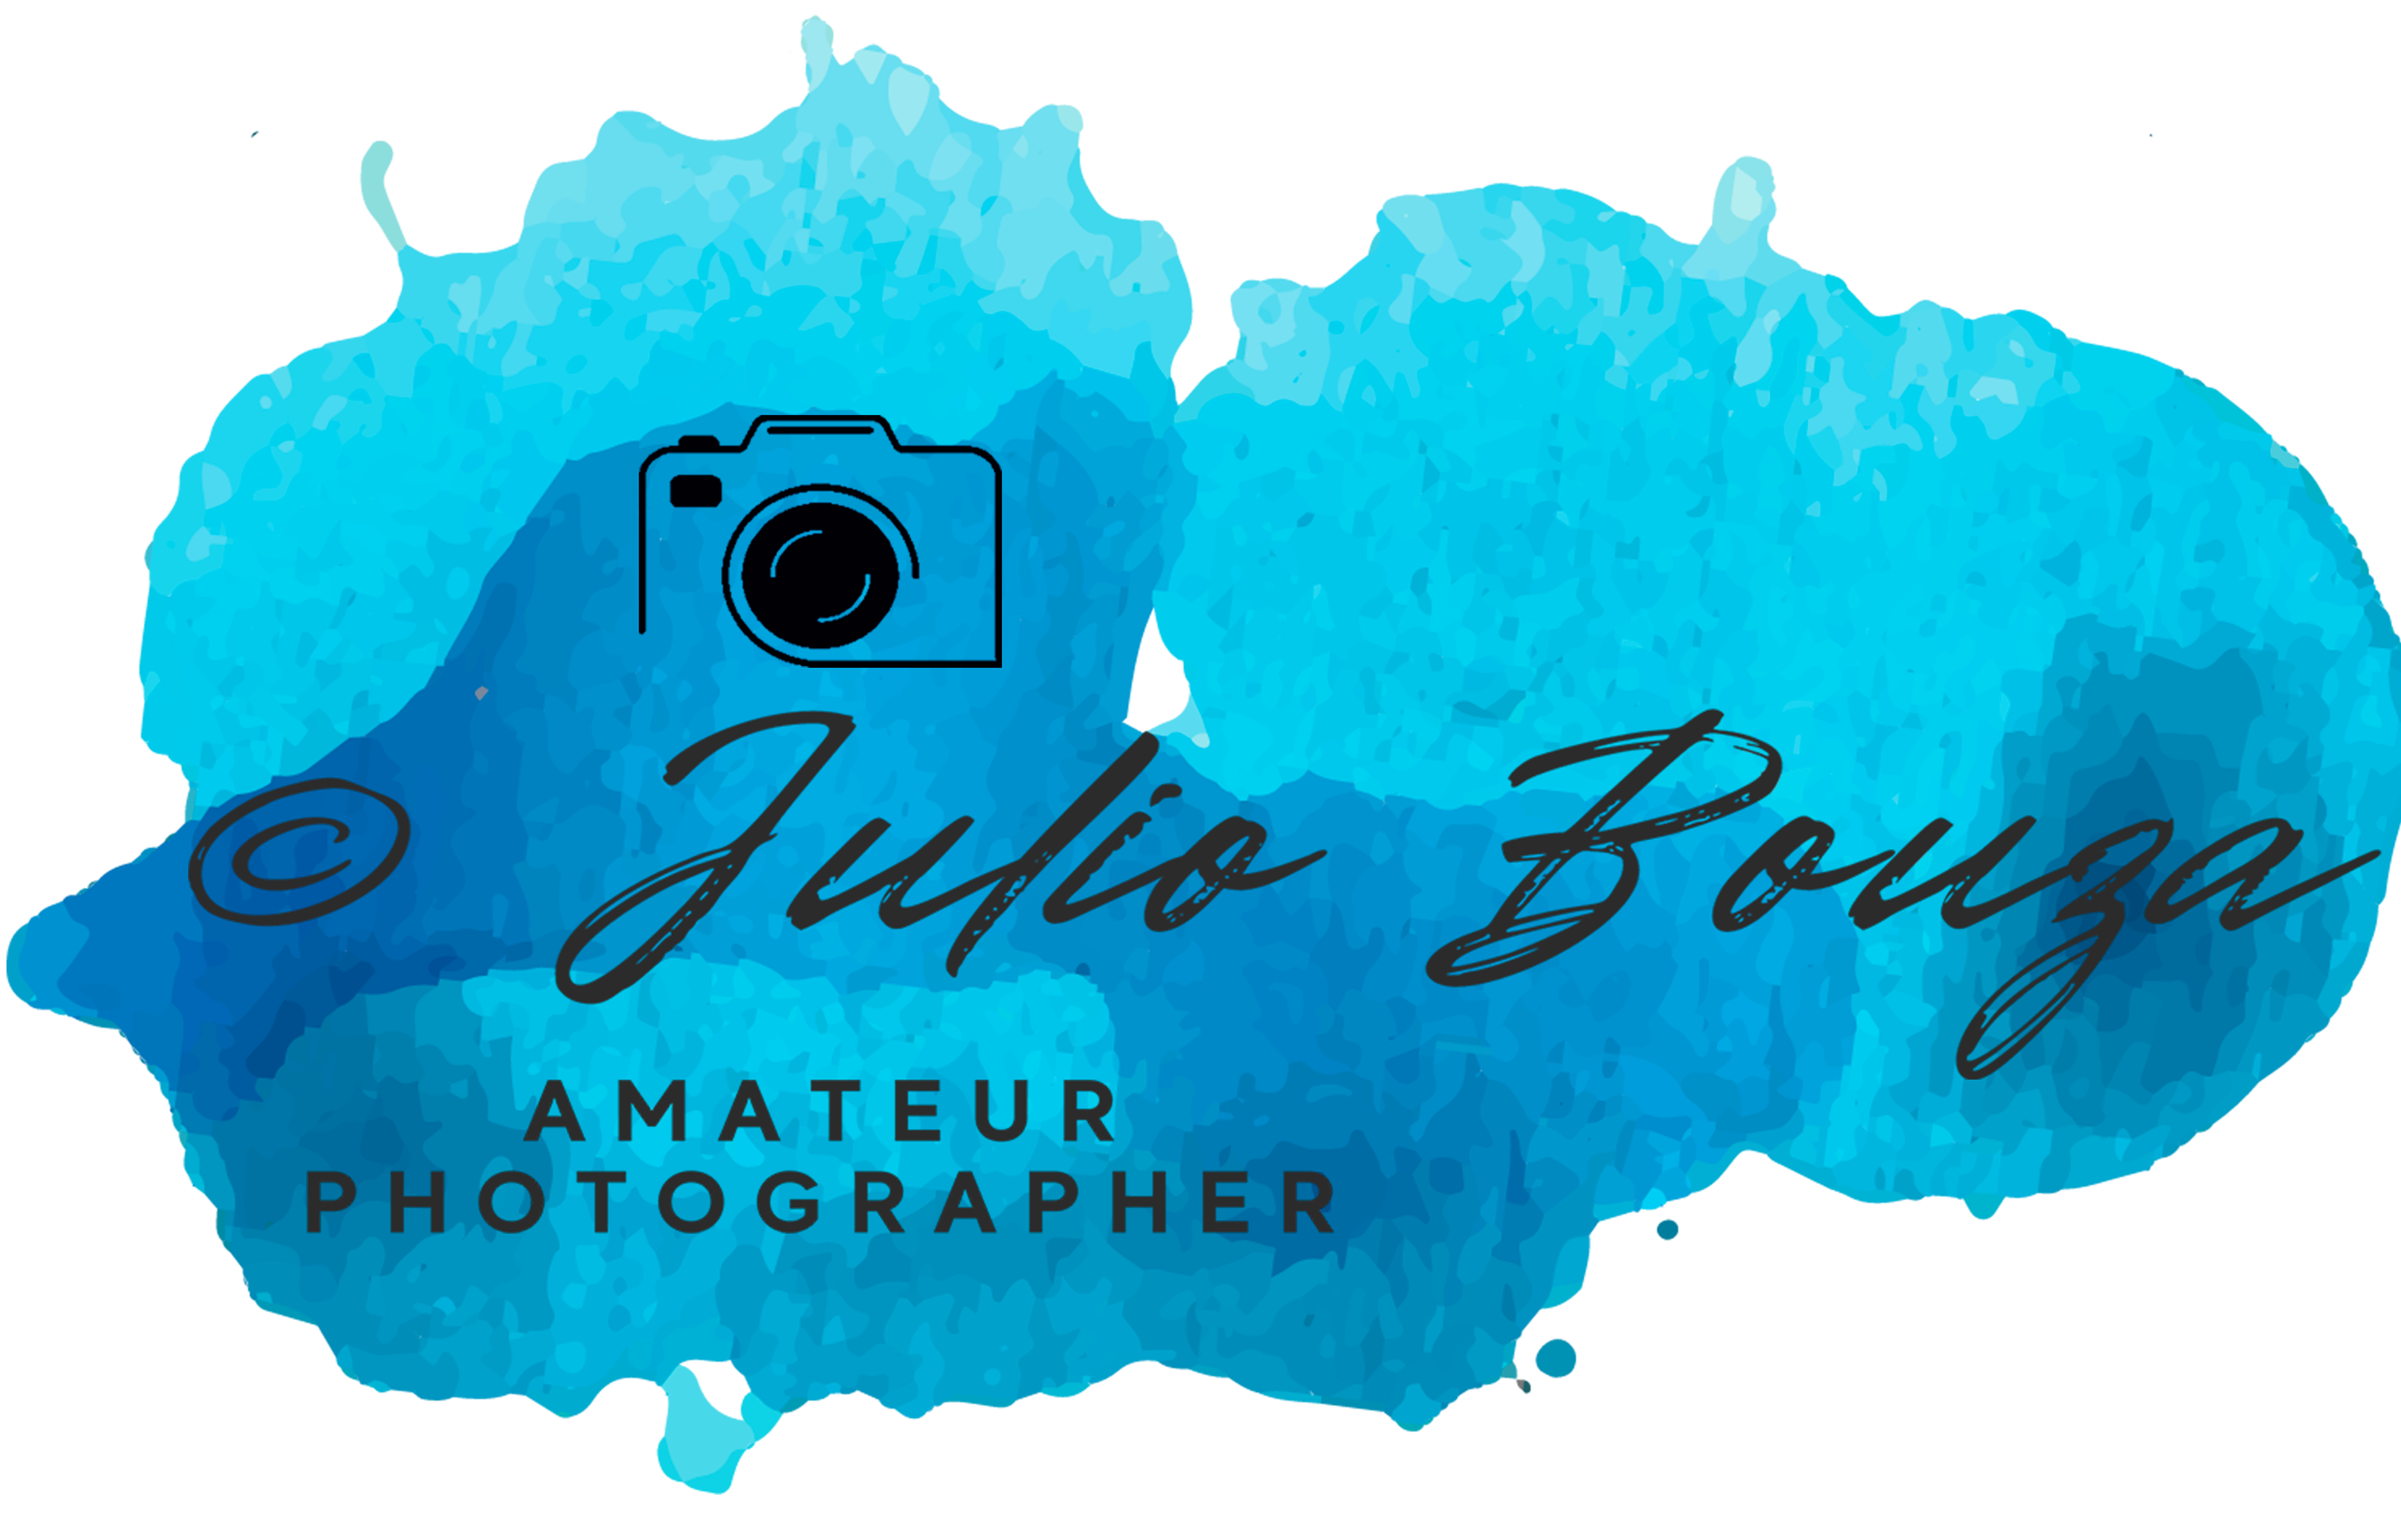 Julio Bouza - Amateur Photographer